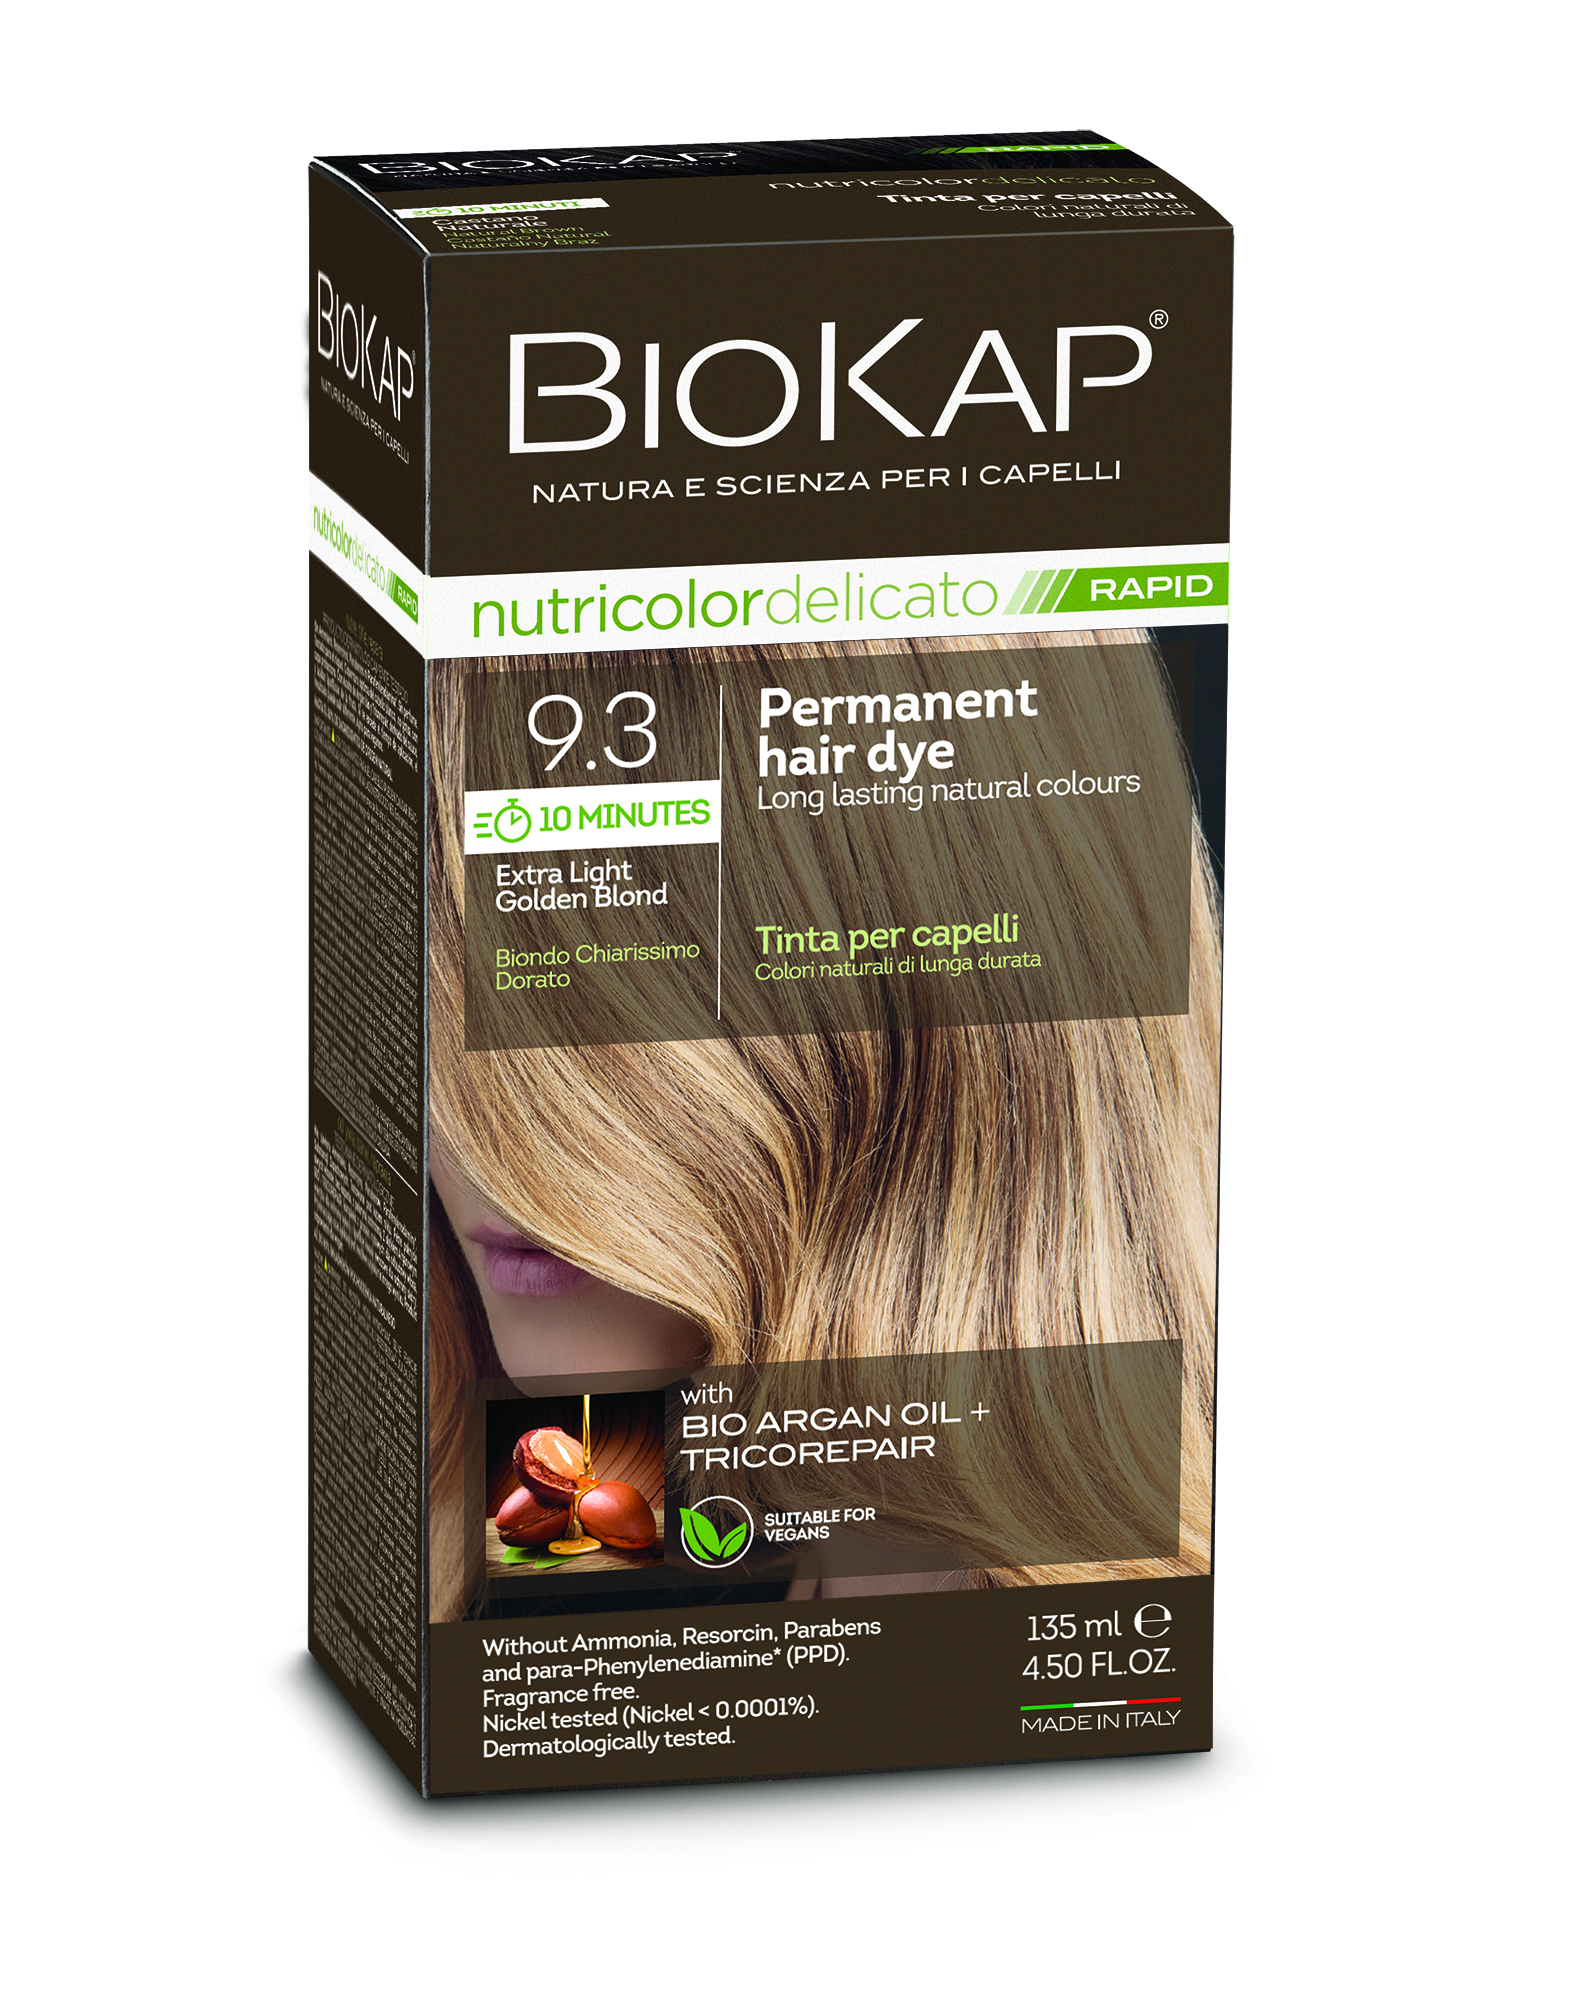 Lad os gøre det bomuld kupon Biokap® NutricolorDelicato ///RAPID – Permanent Hårfarve – Lime Pharma